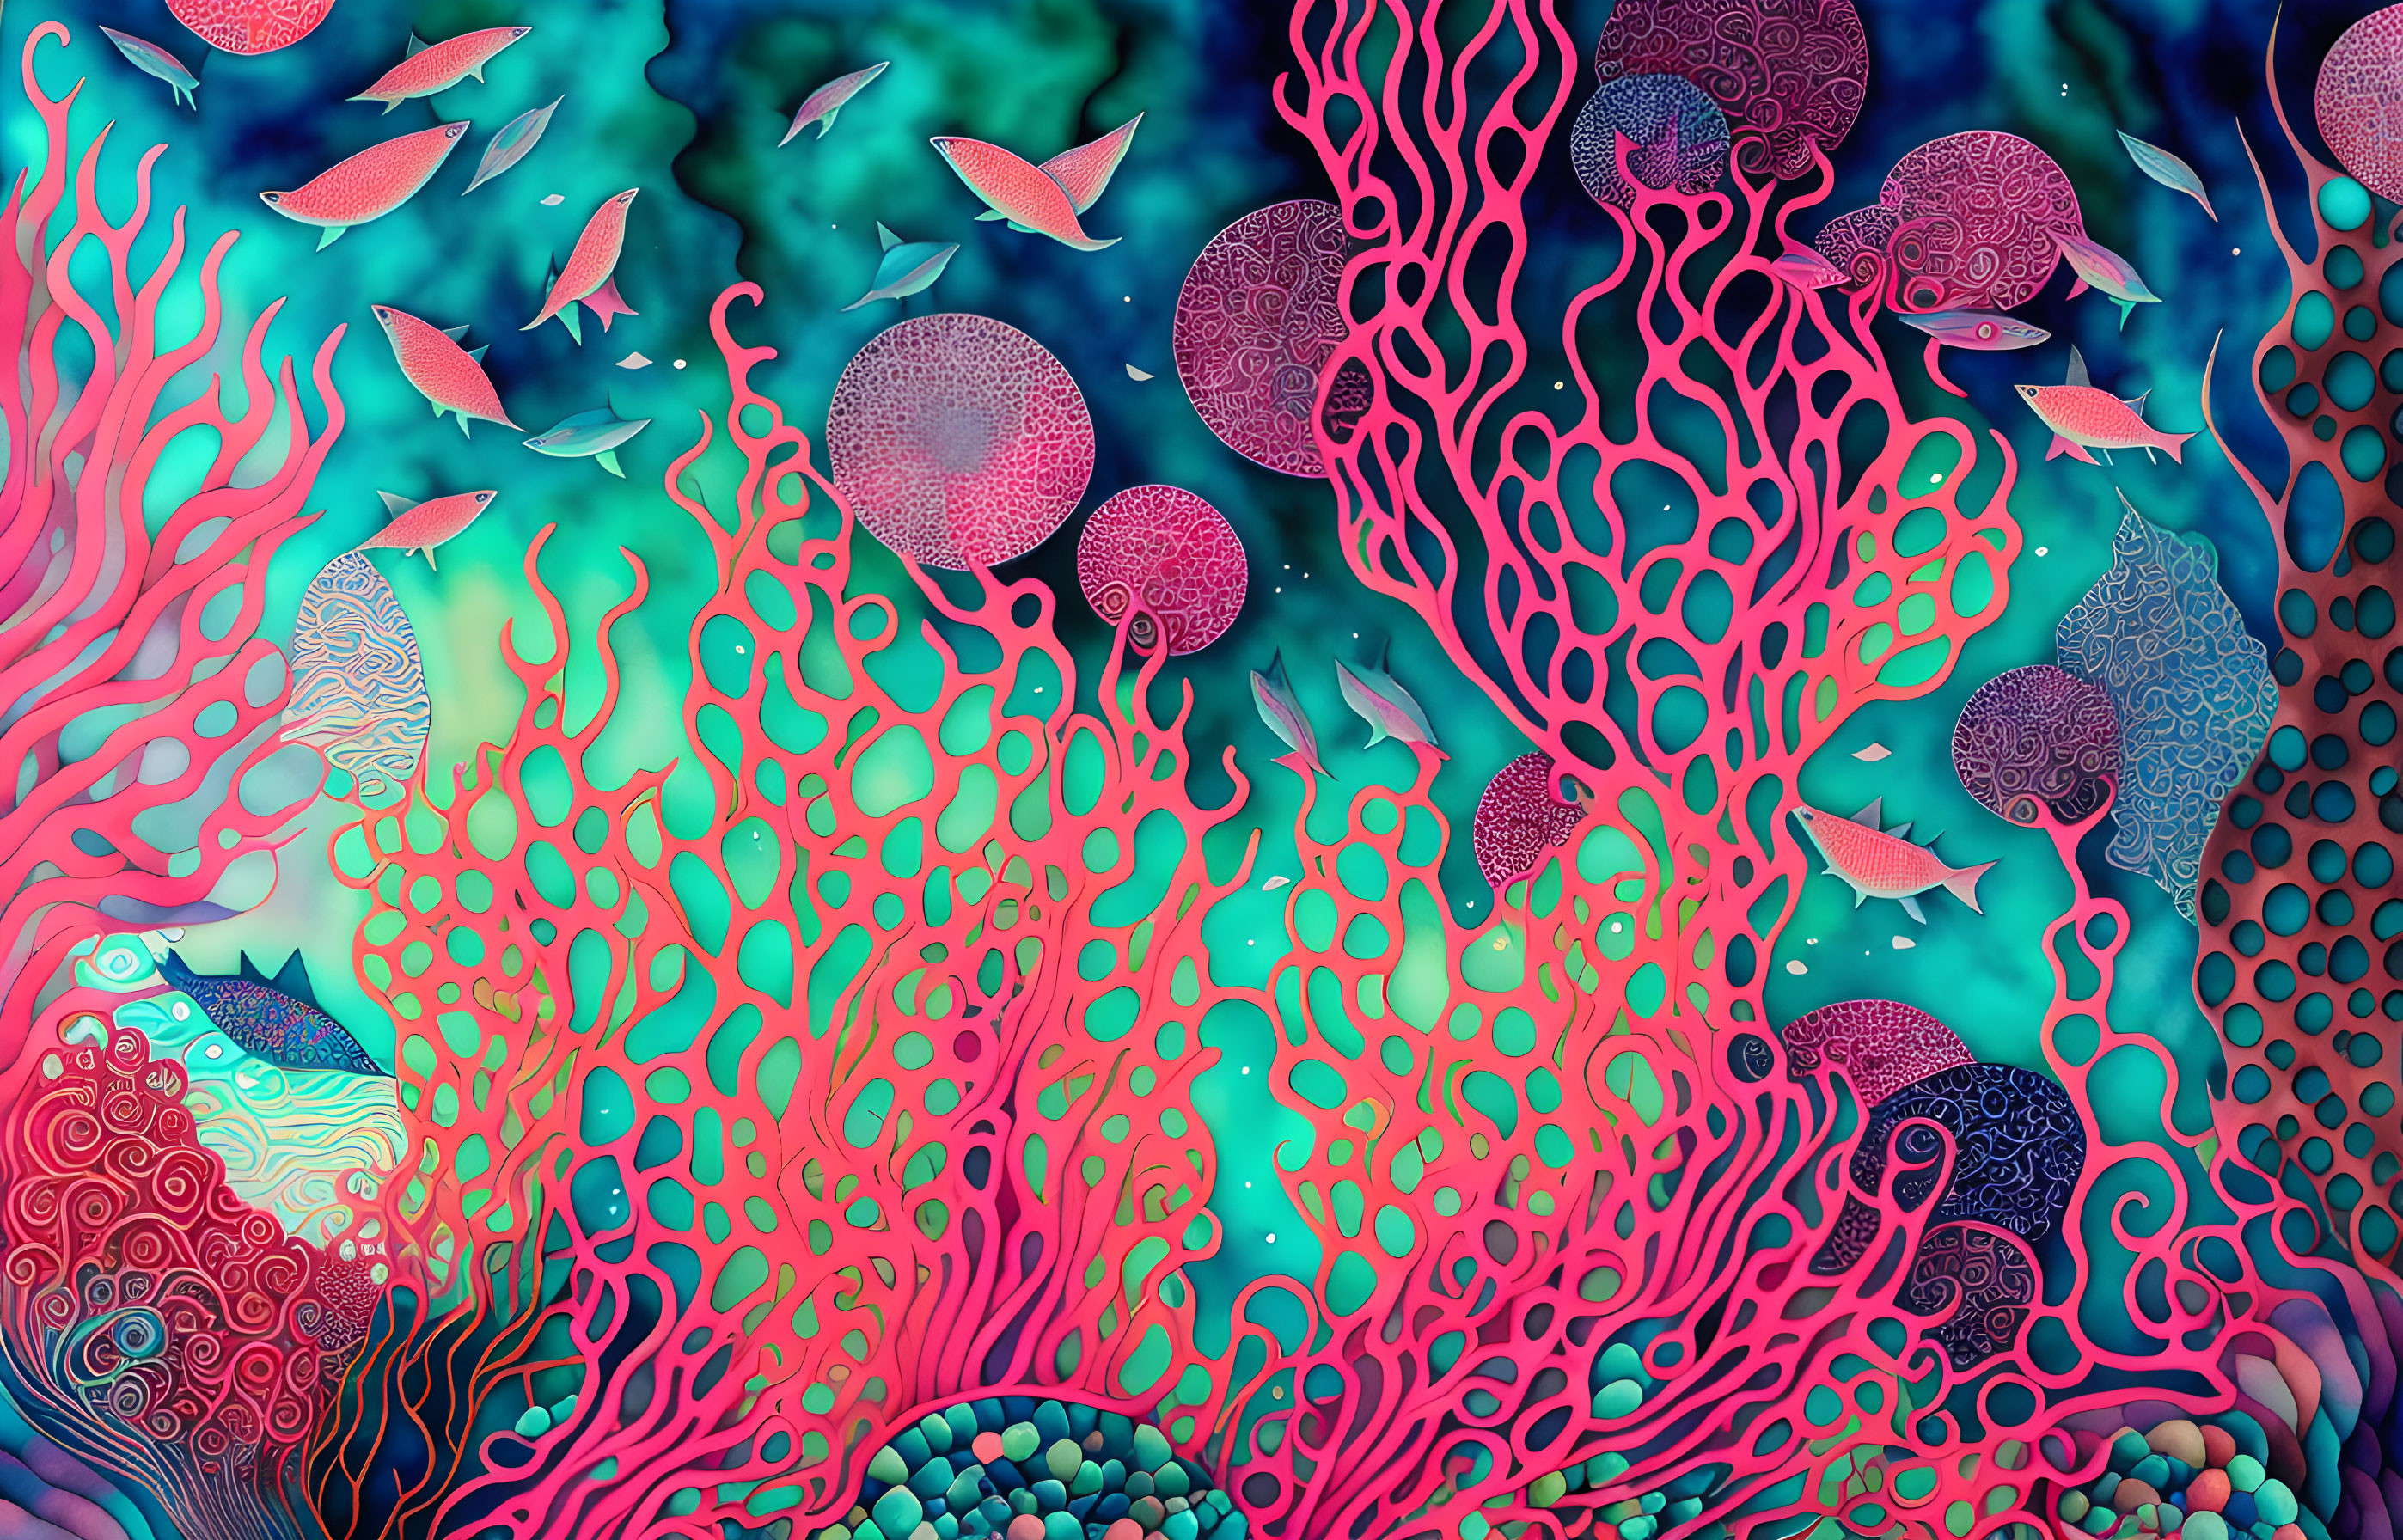 Coral Reef Fantasia